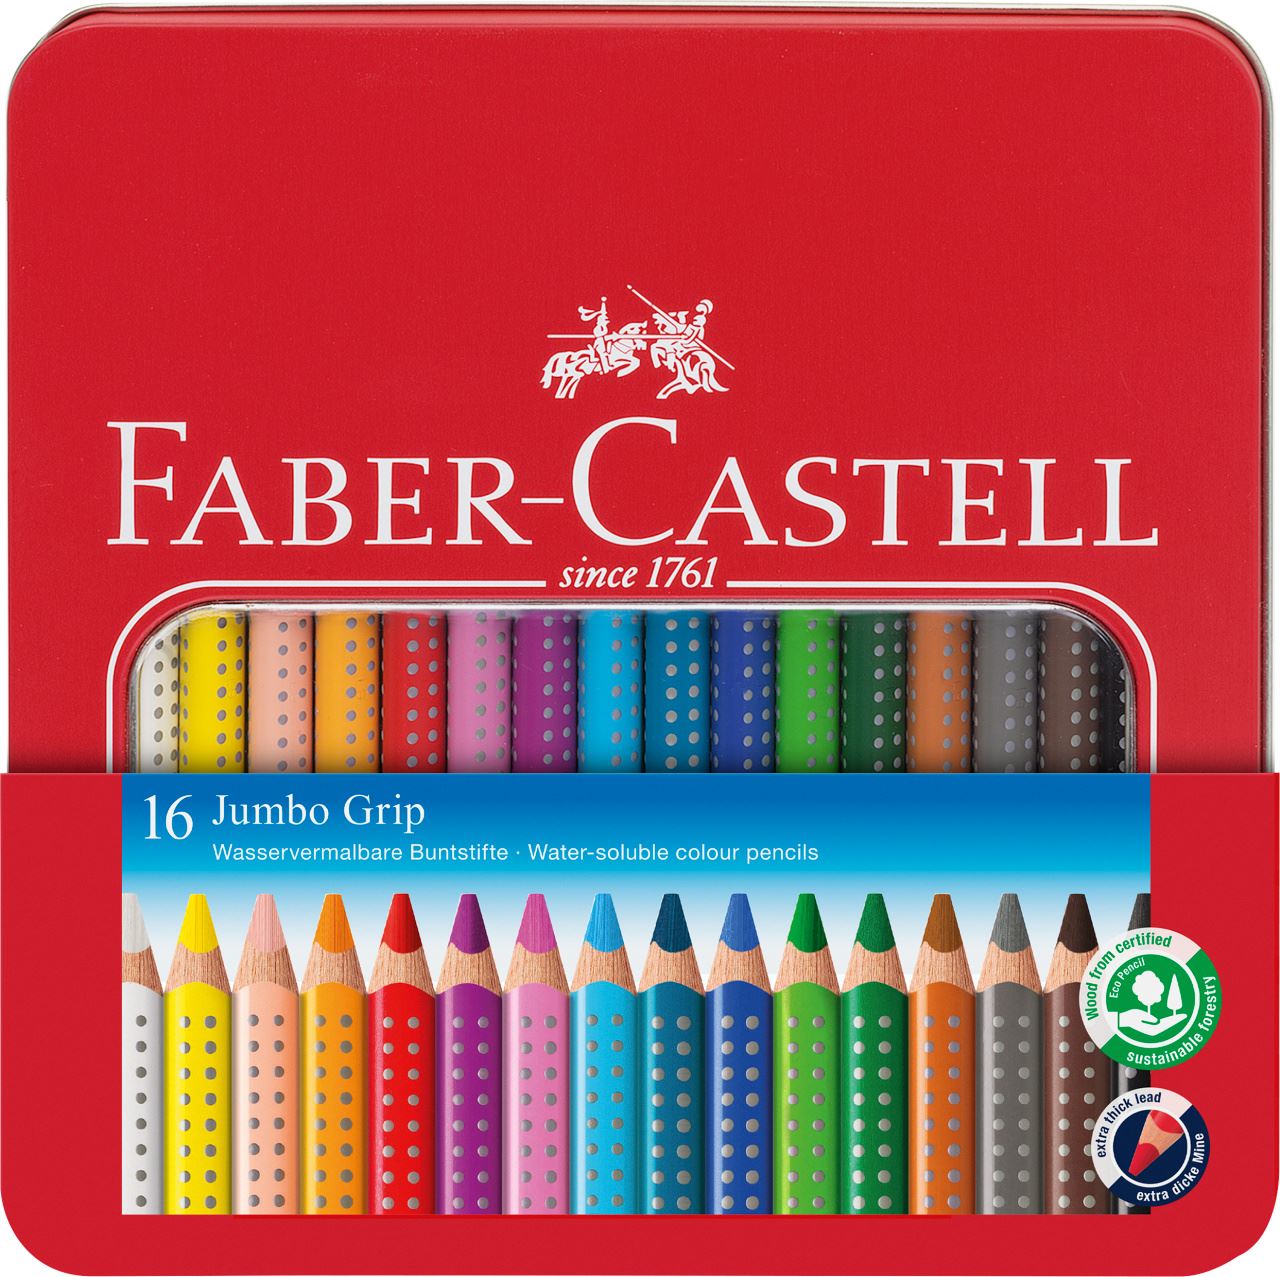 Faber-Castell - Jumbo Grip Buntstift, 16er Metalletui